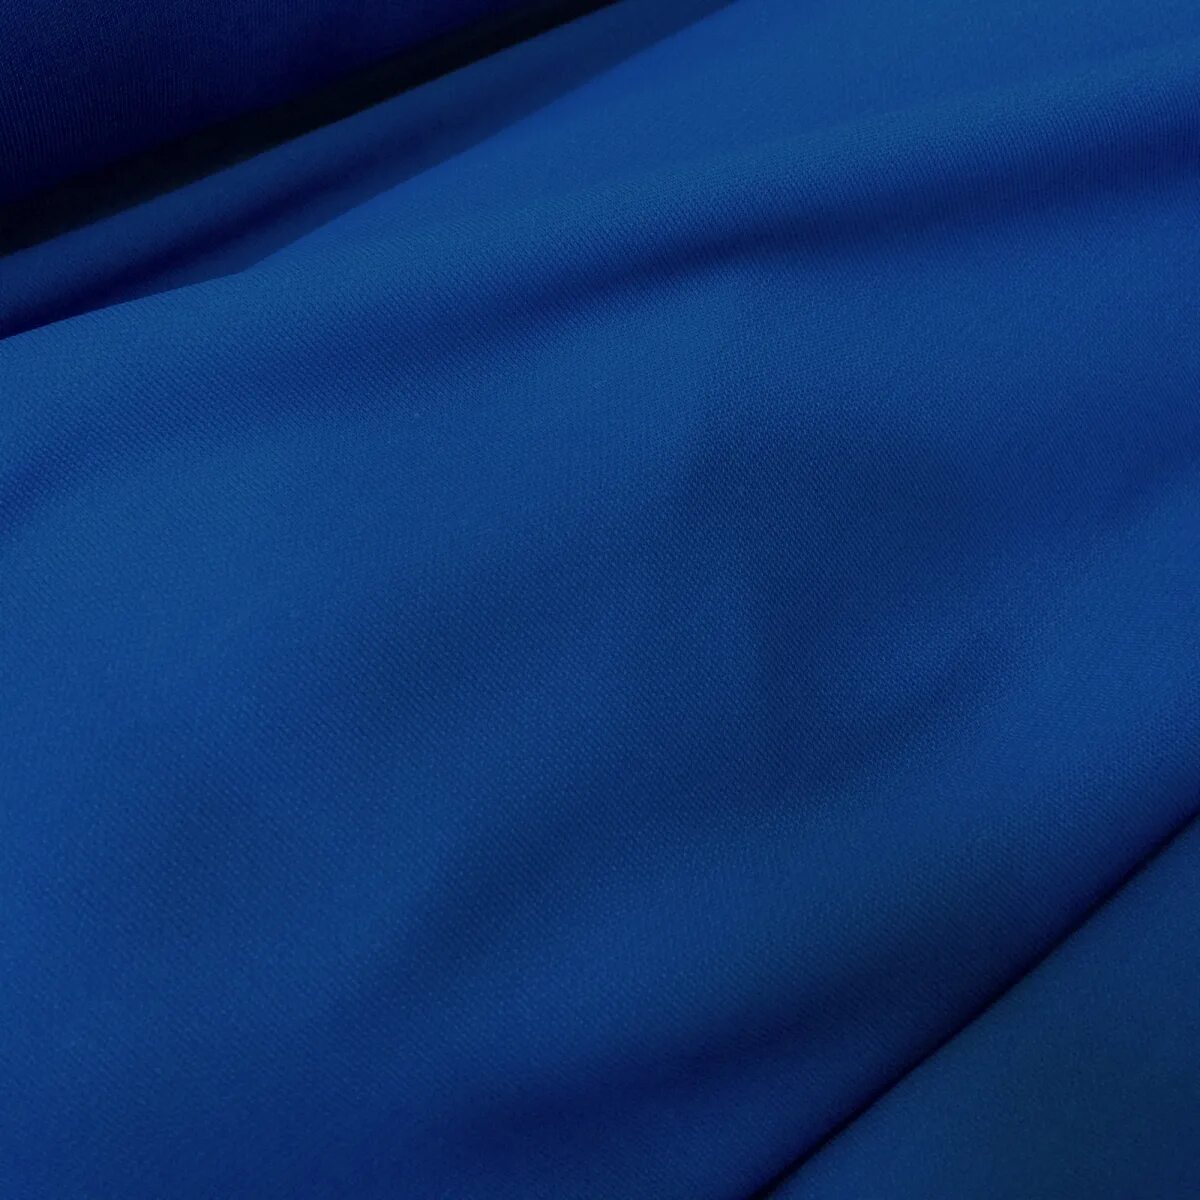 Синий стрейч. Ткань стрейч трикотаж. Ткань стрейч синего цвета. Эластичная ткань. Ткань микродайвинг.